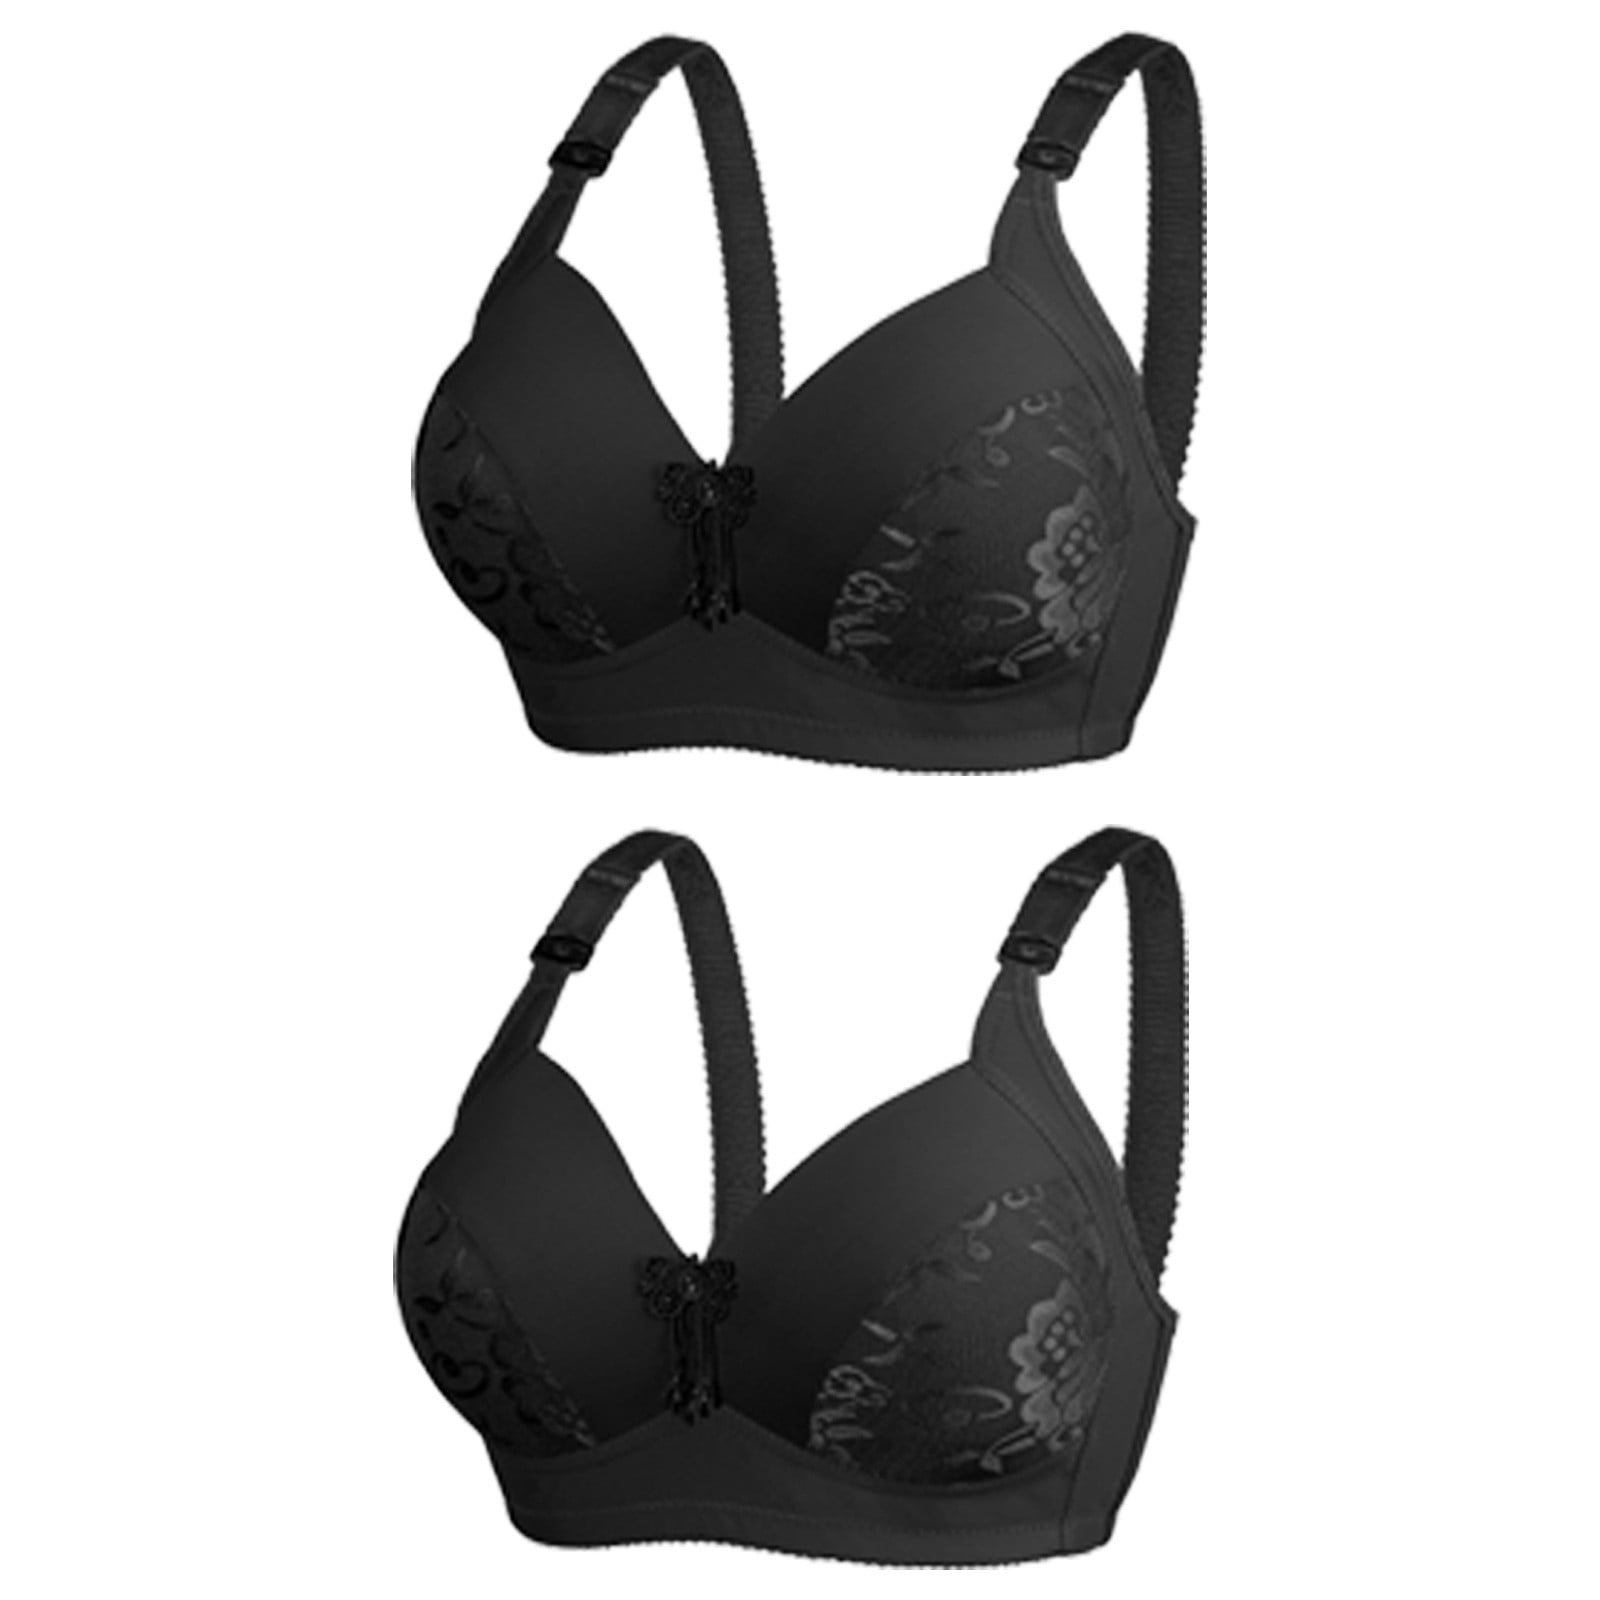 Lastesso Bralette Pack Adjustable Straps Wireless Lace Bras for Women ...